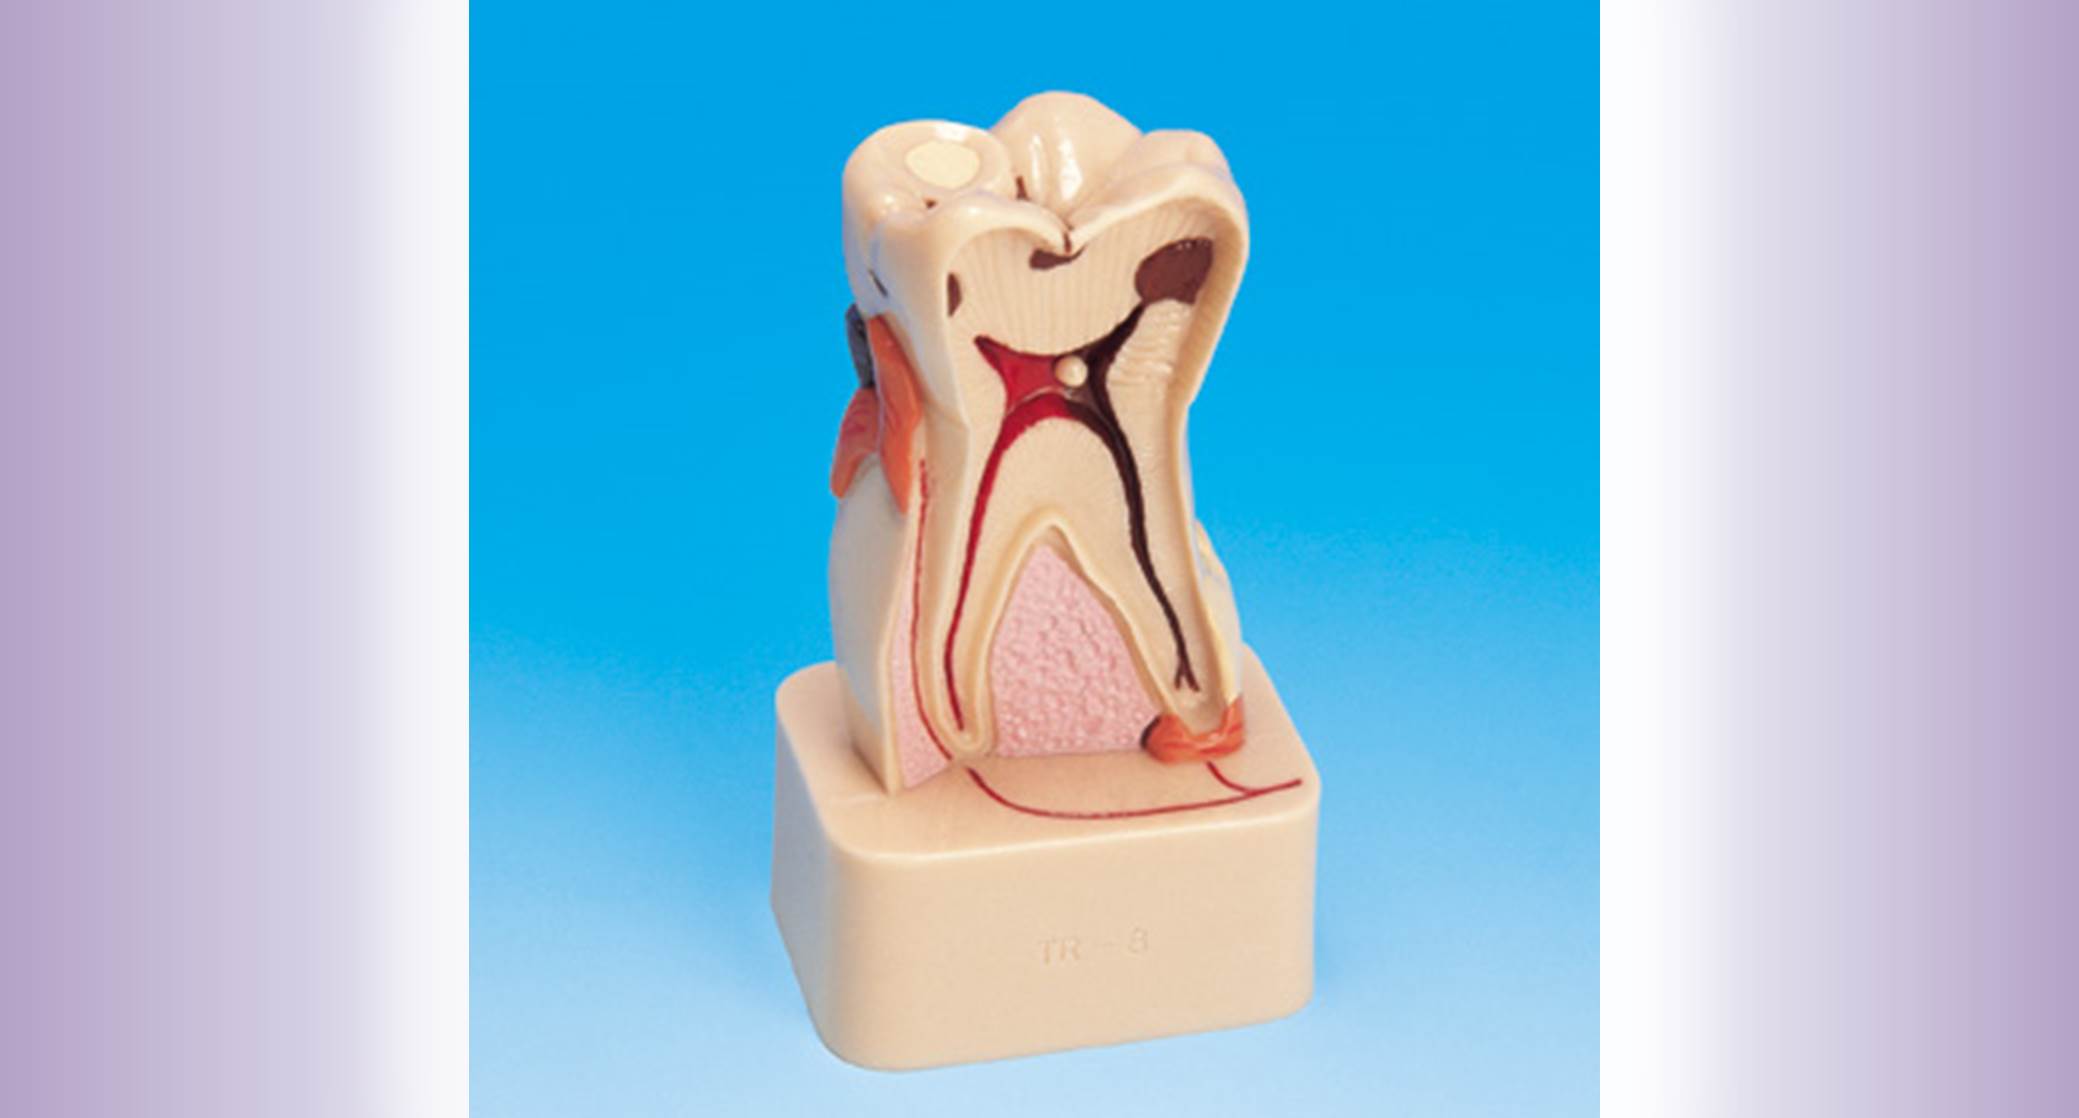 Tooth Disease Patient Education Models